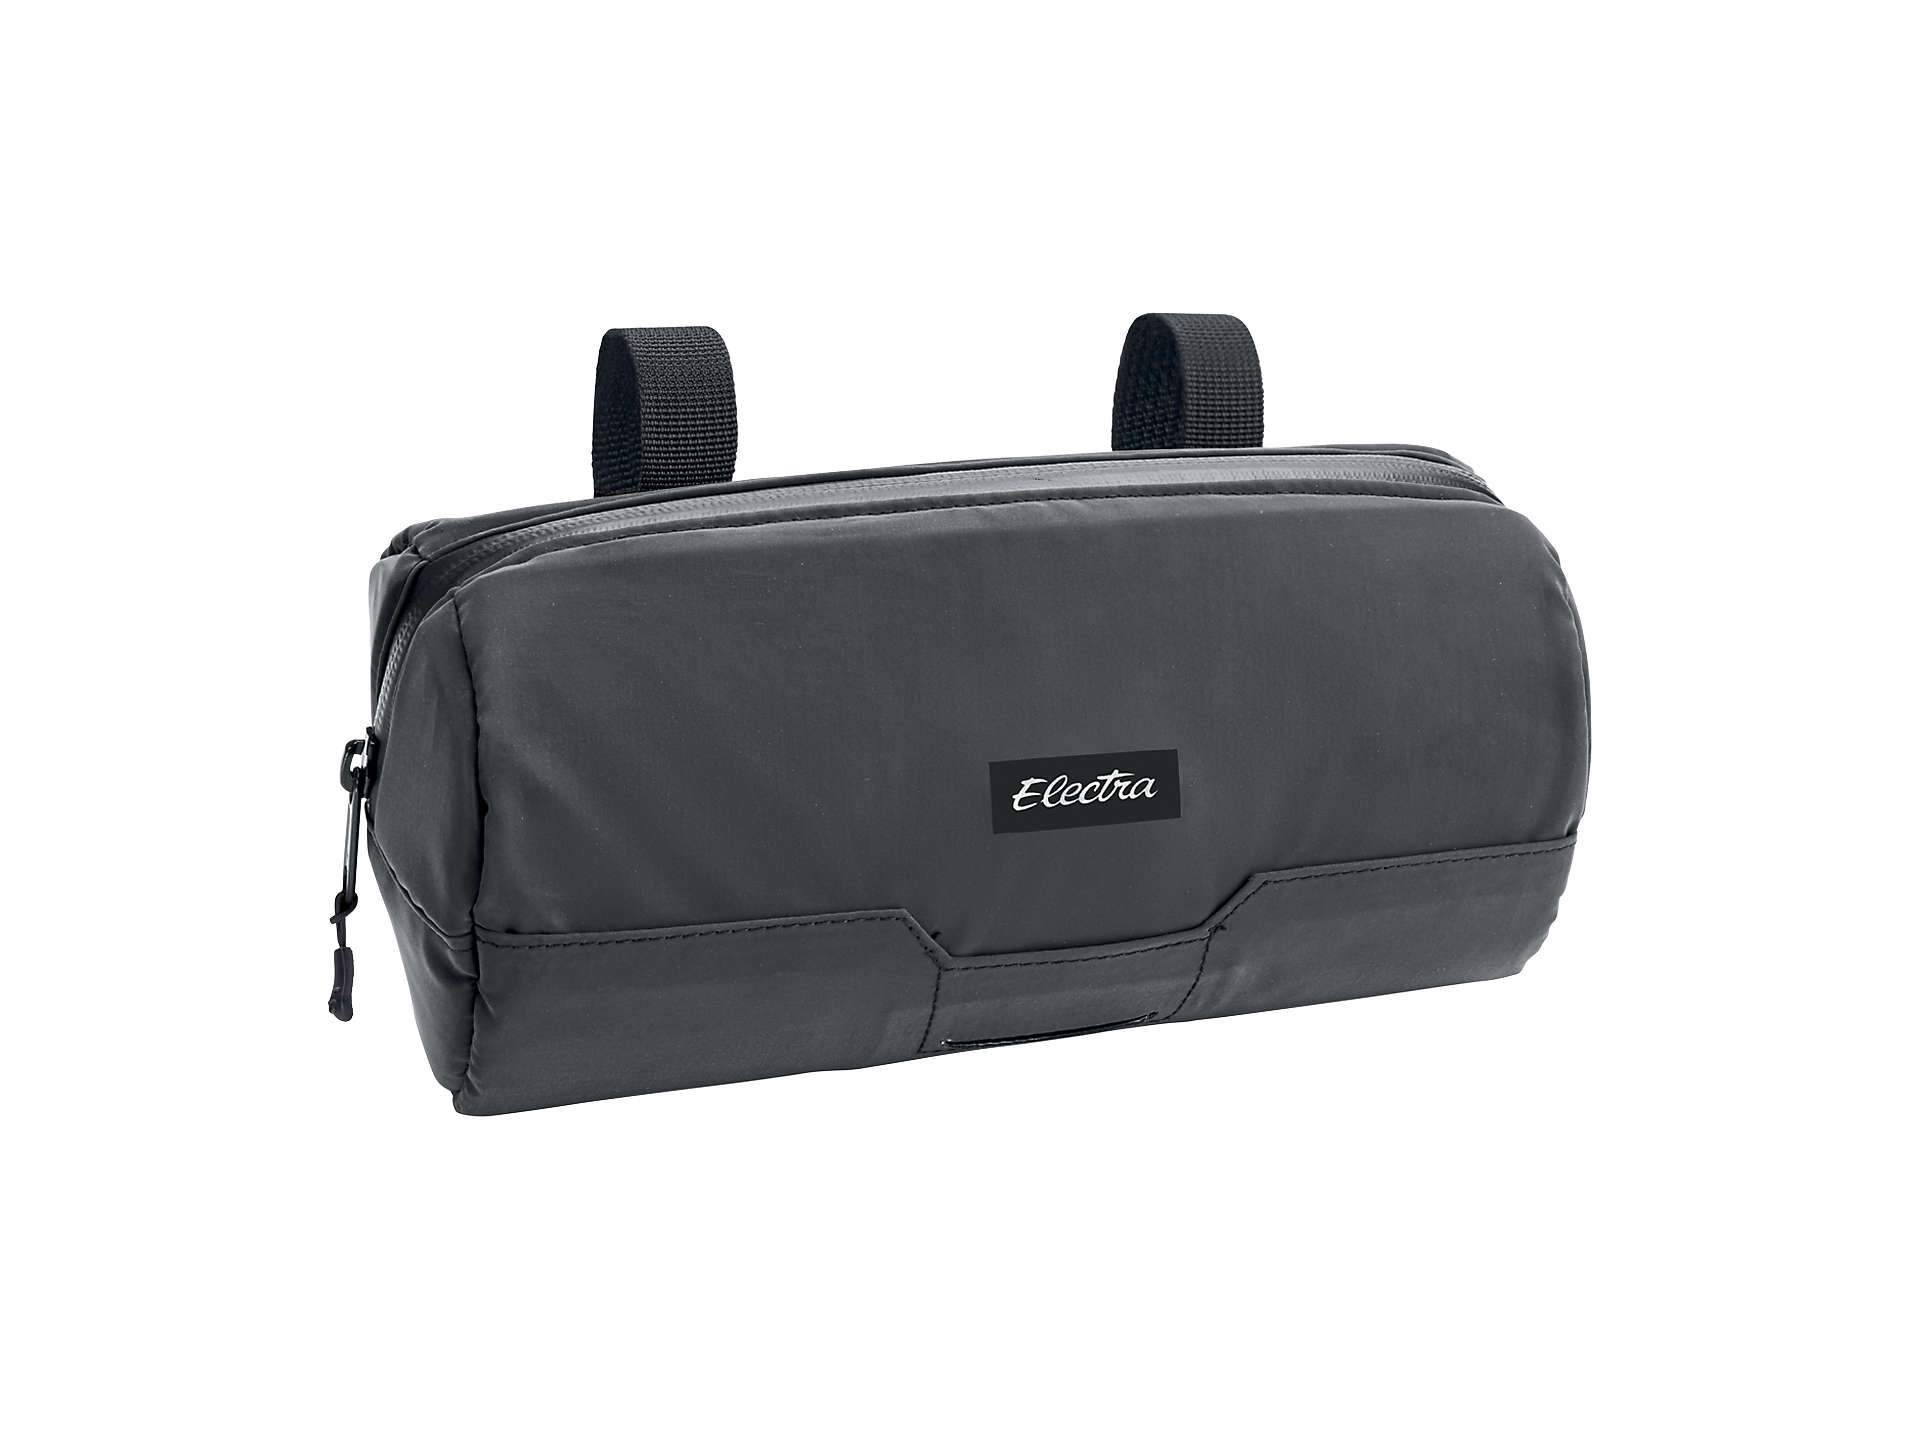 Electra Commuter Handlebar Reflective Bag